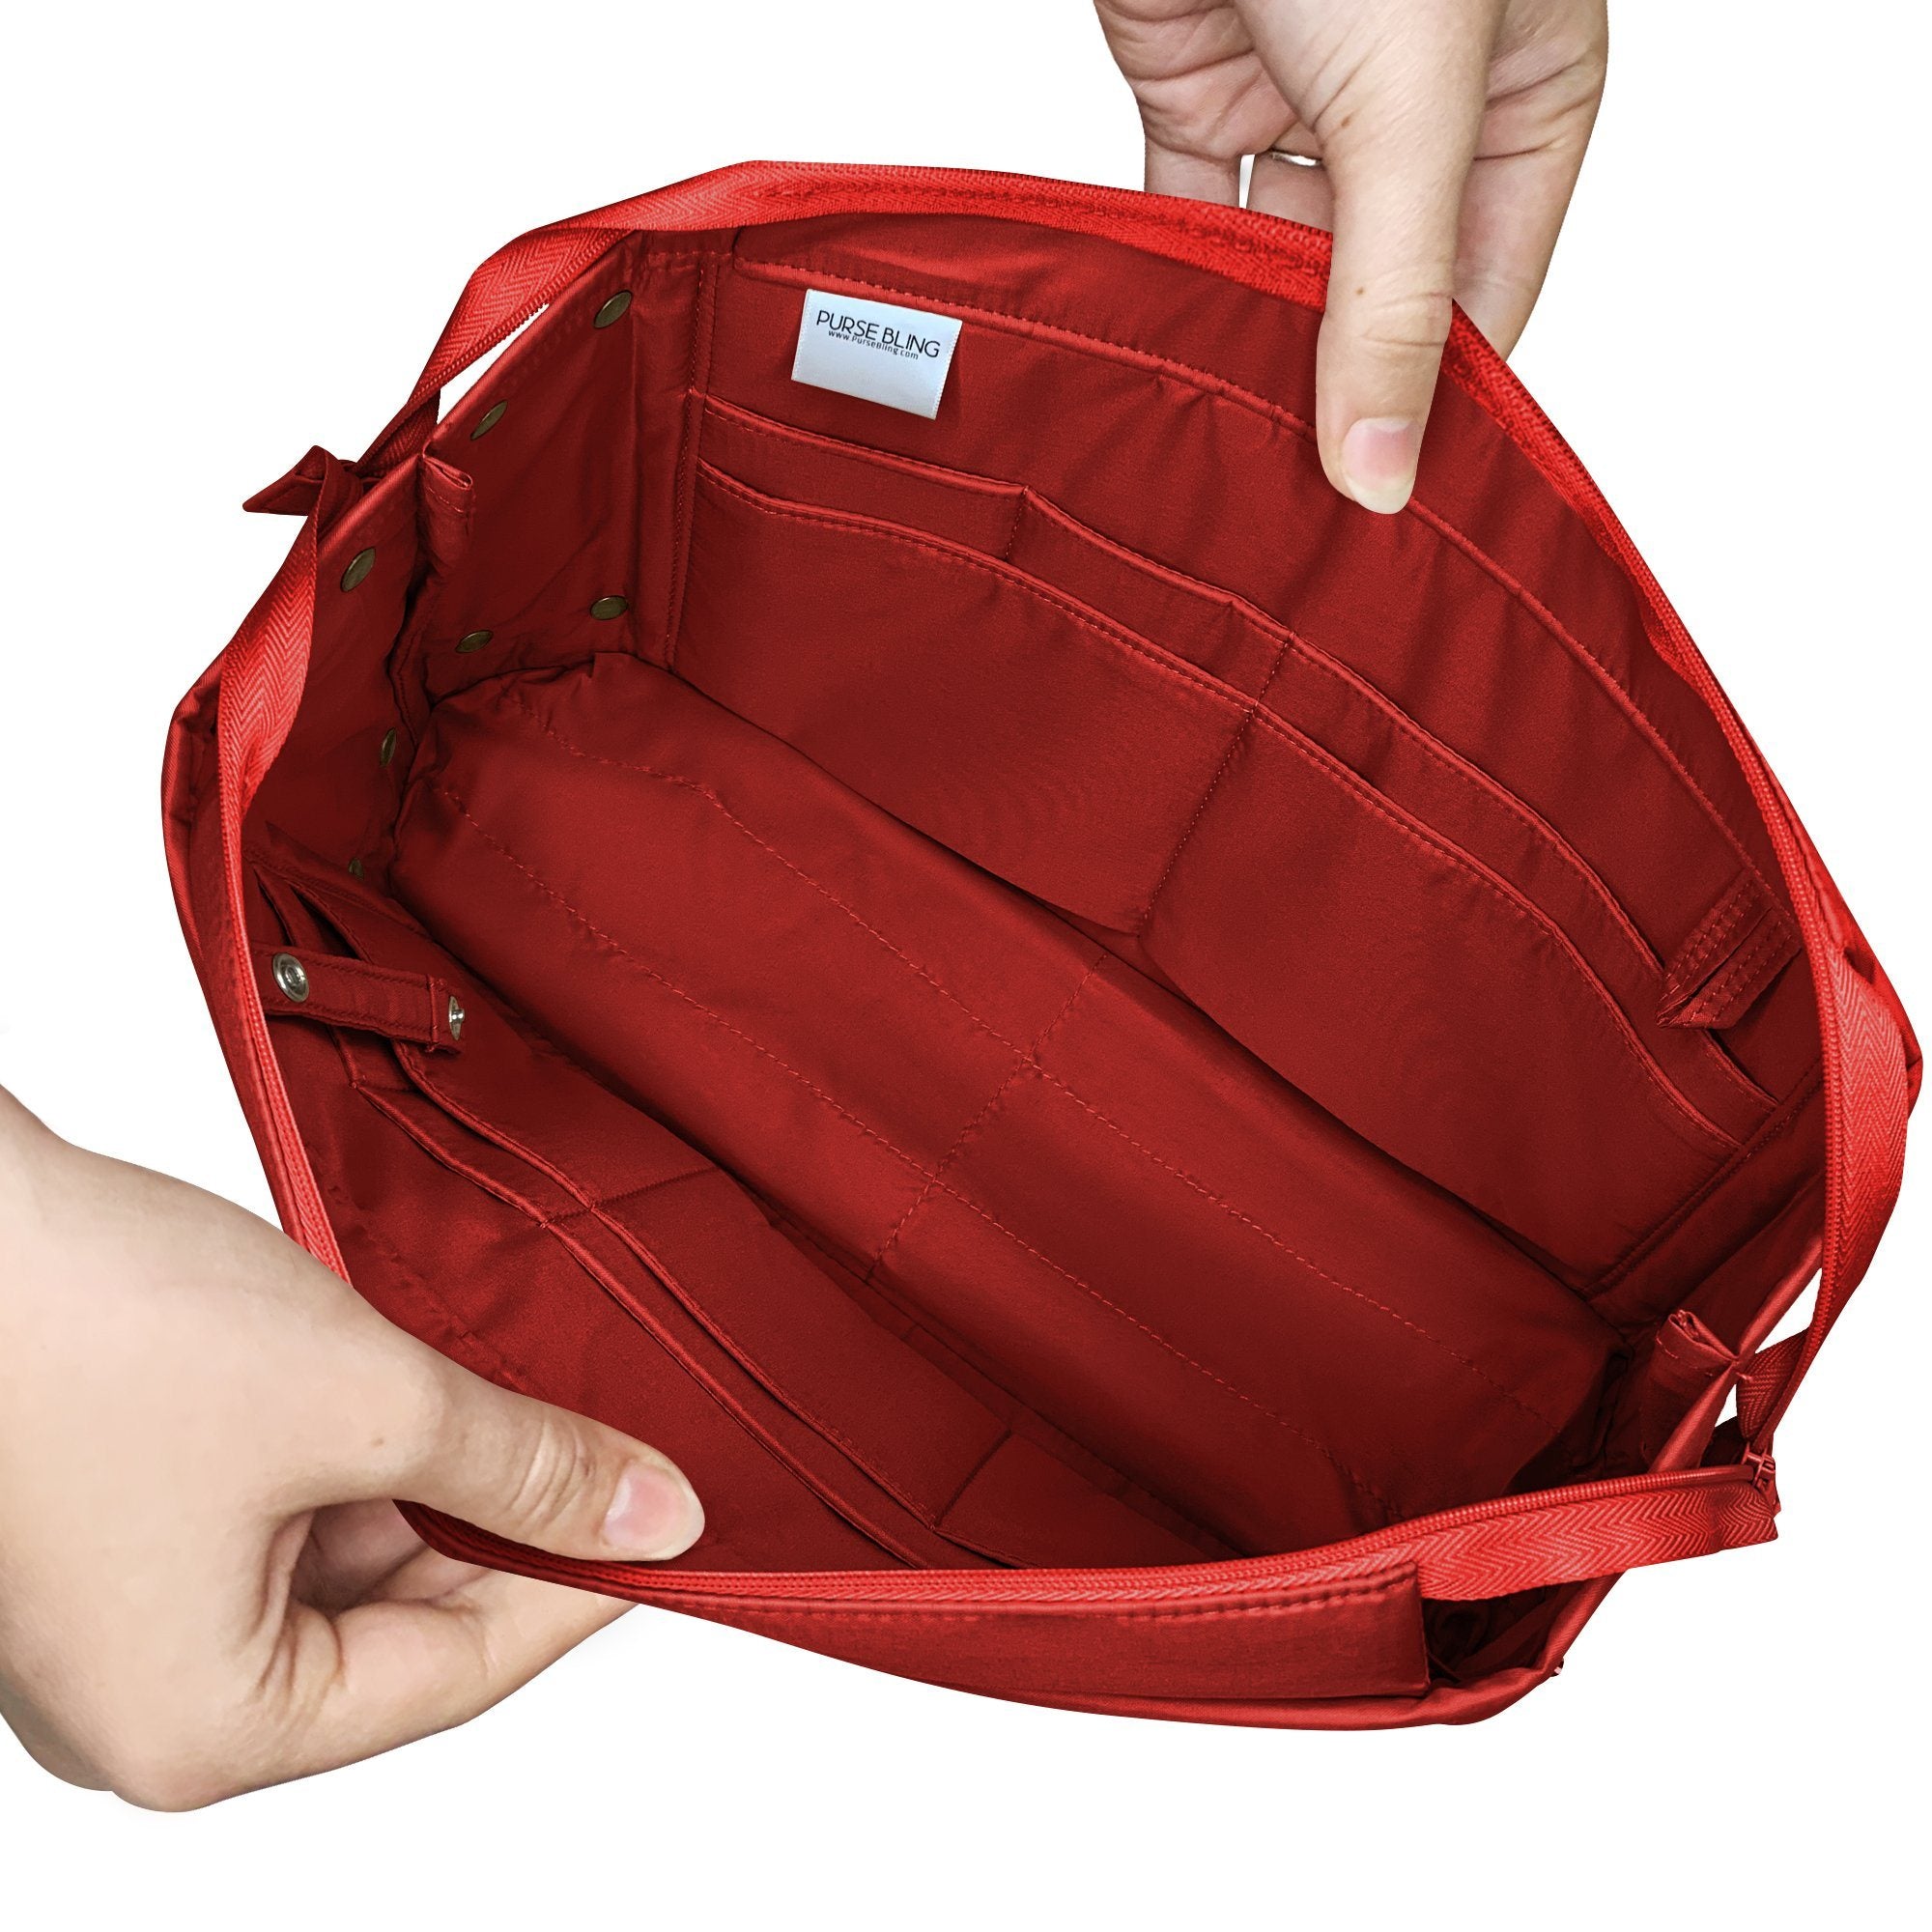 LEXSION Purse Organizer Insert Felt Bag with Zipper Handbag Tote Shaper  Insert for GG Marmont Matelasse Shoulder Bag 2 pcs-Buy 1 Get 1 Bag Free  X-Small 8030 Black : Amazon.in: Shoes & Handbags